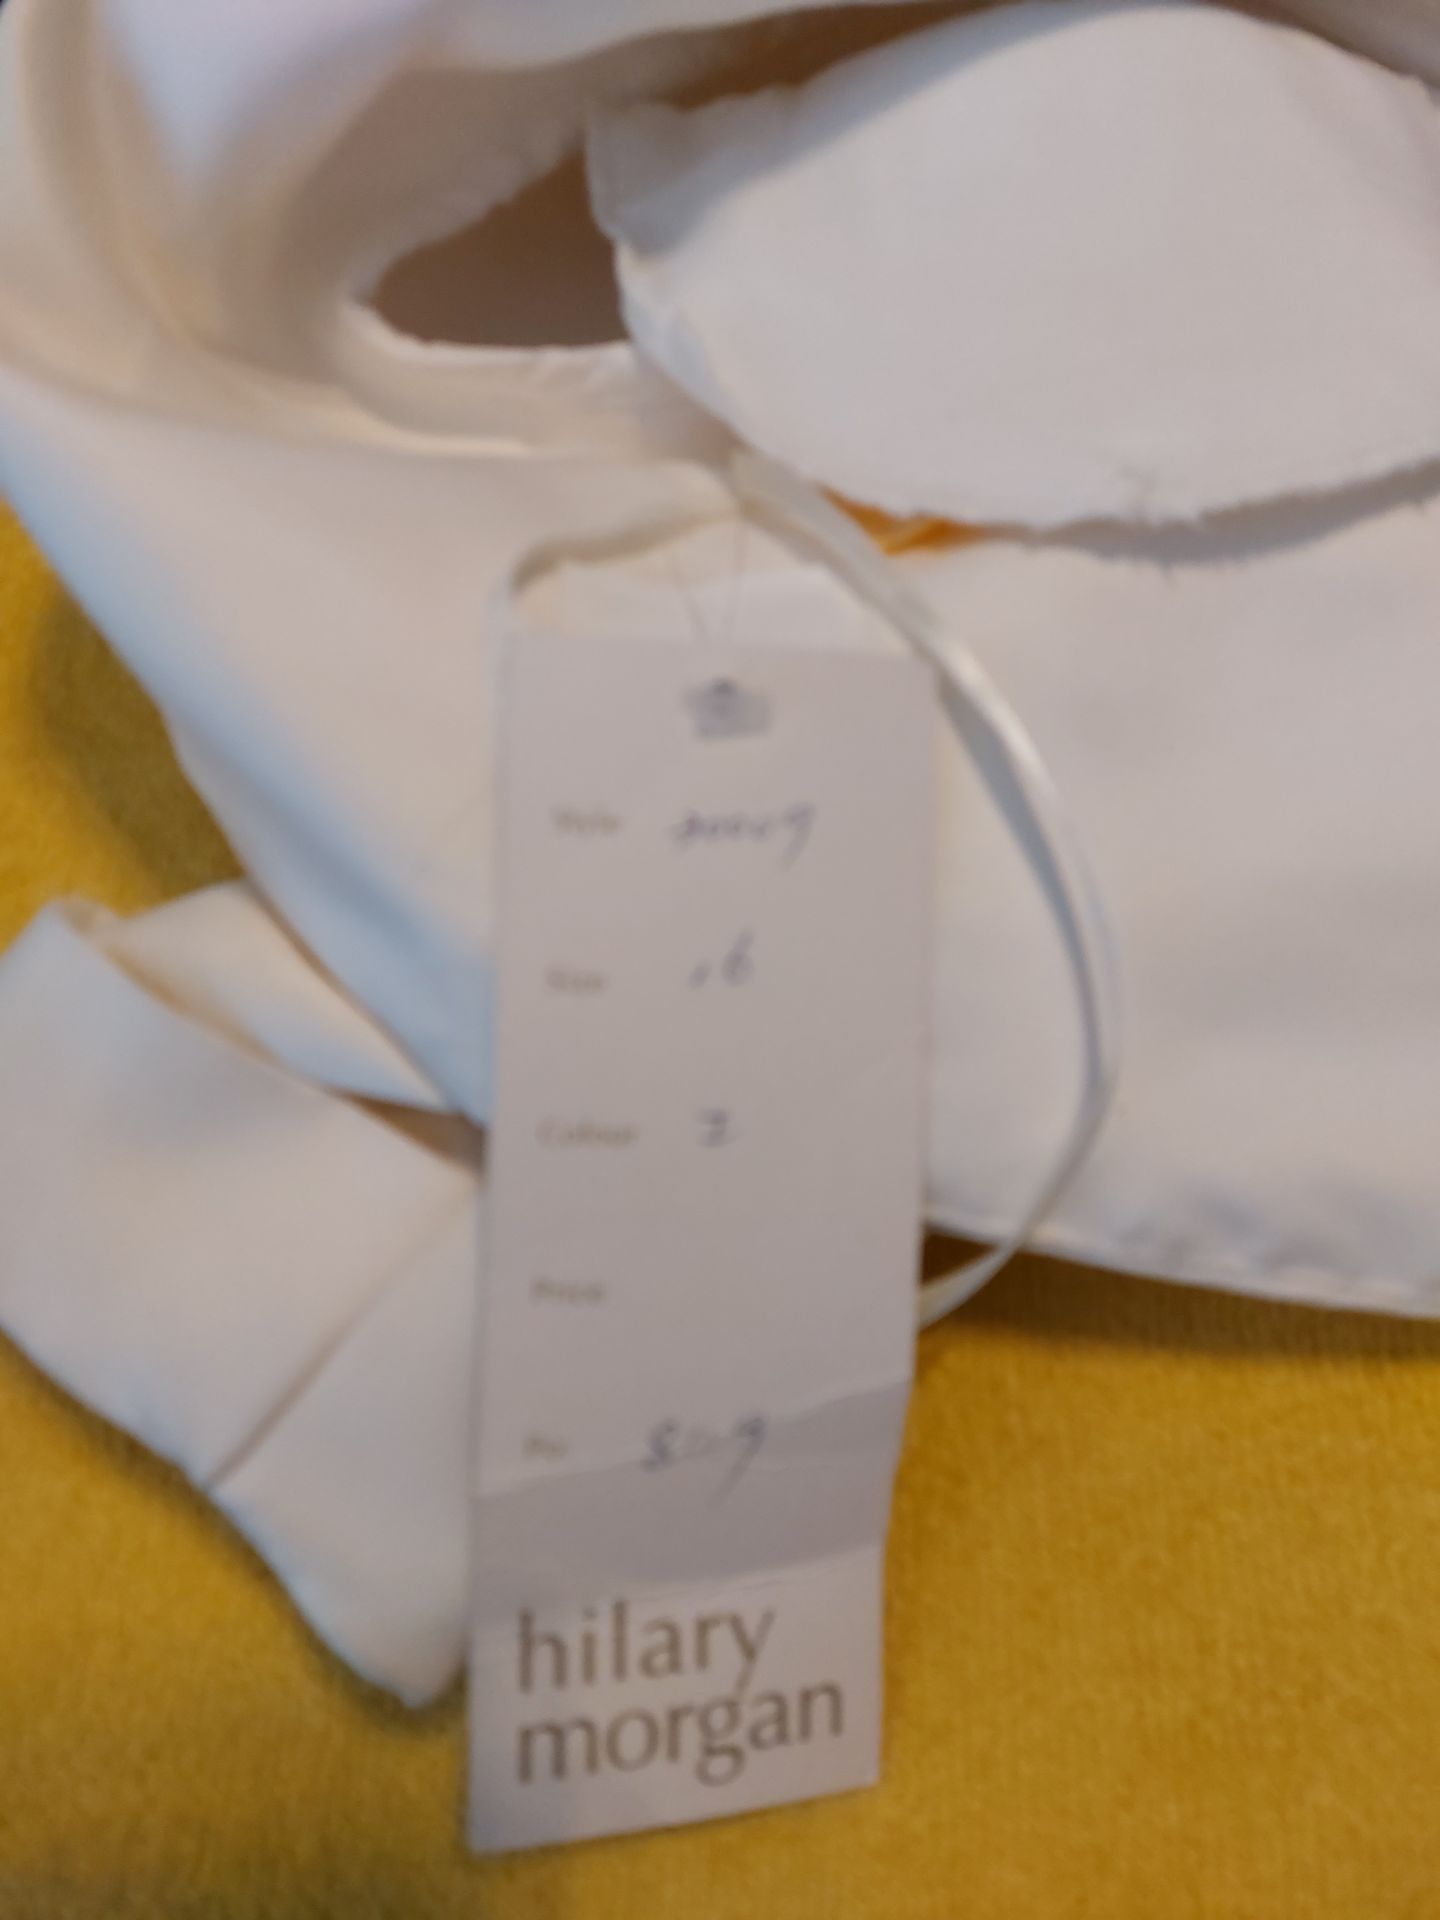 Ivory Jacket From Hilary Morgan - Image 3 of 3